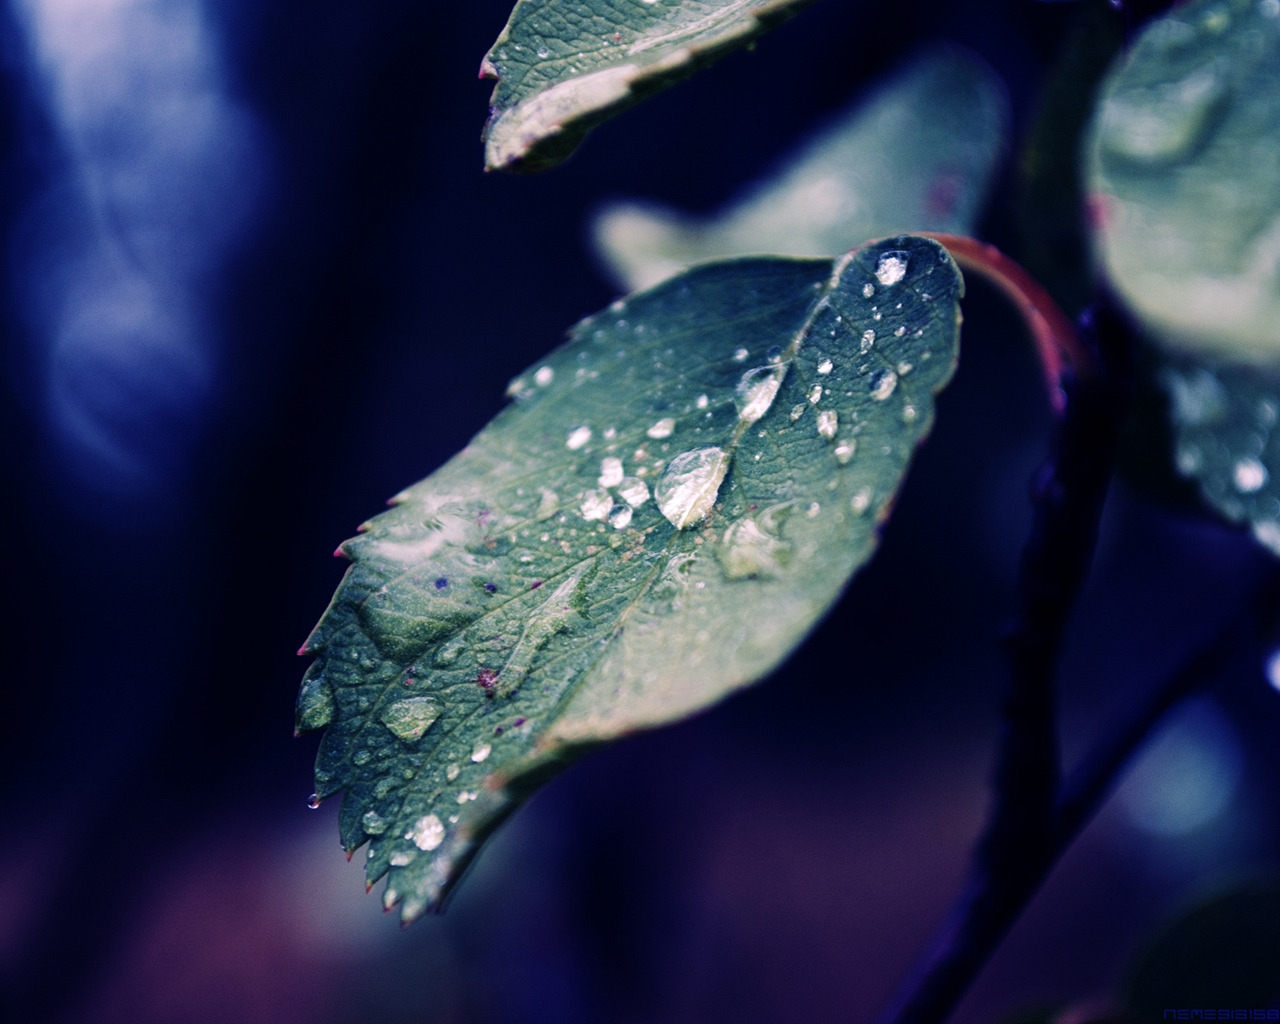 Fall Rain for 1280 x 1024 resolution